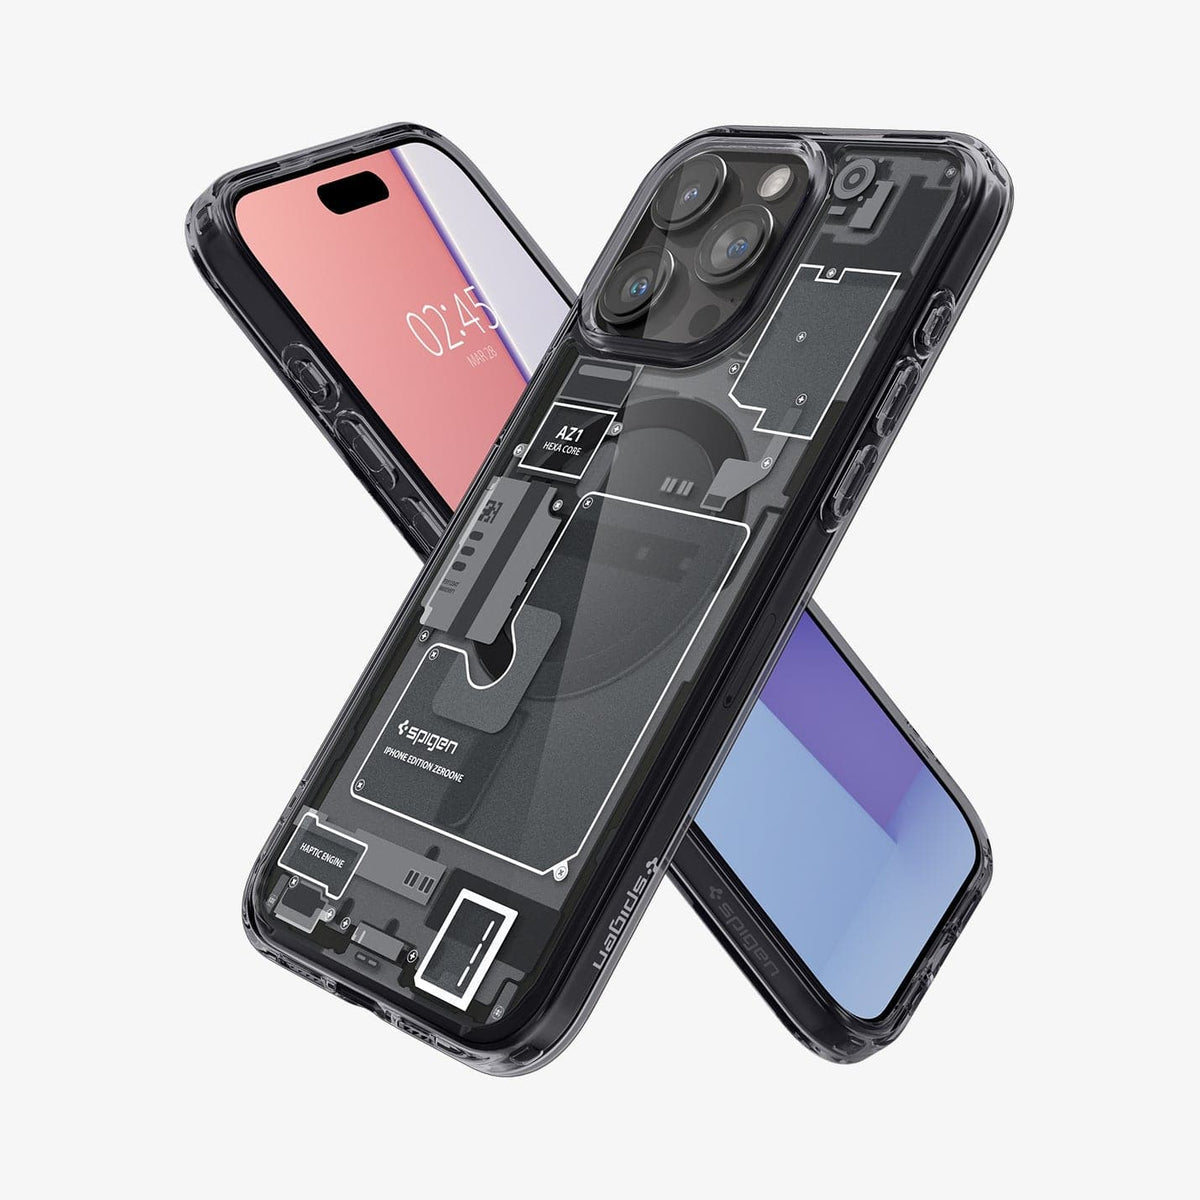 iPhone 15 Pro Spigen Ultra Hybrid Mag Case